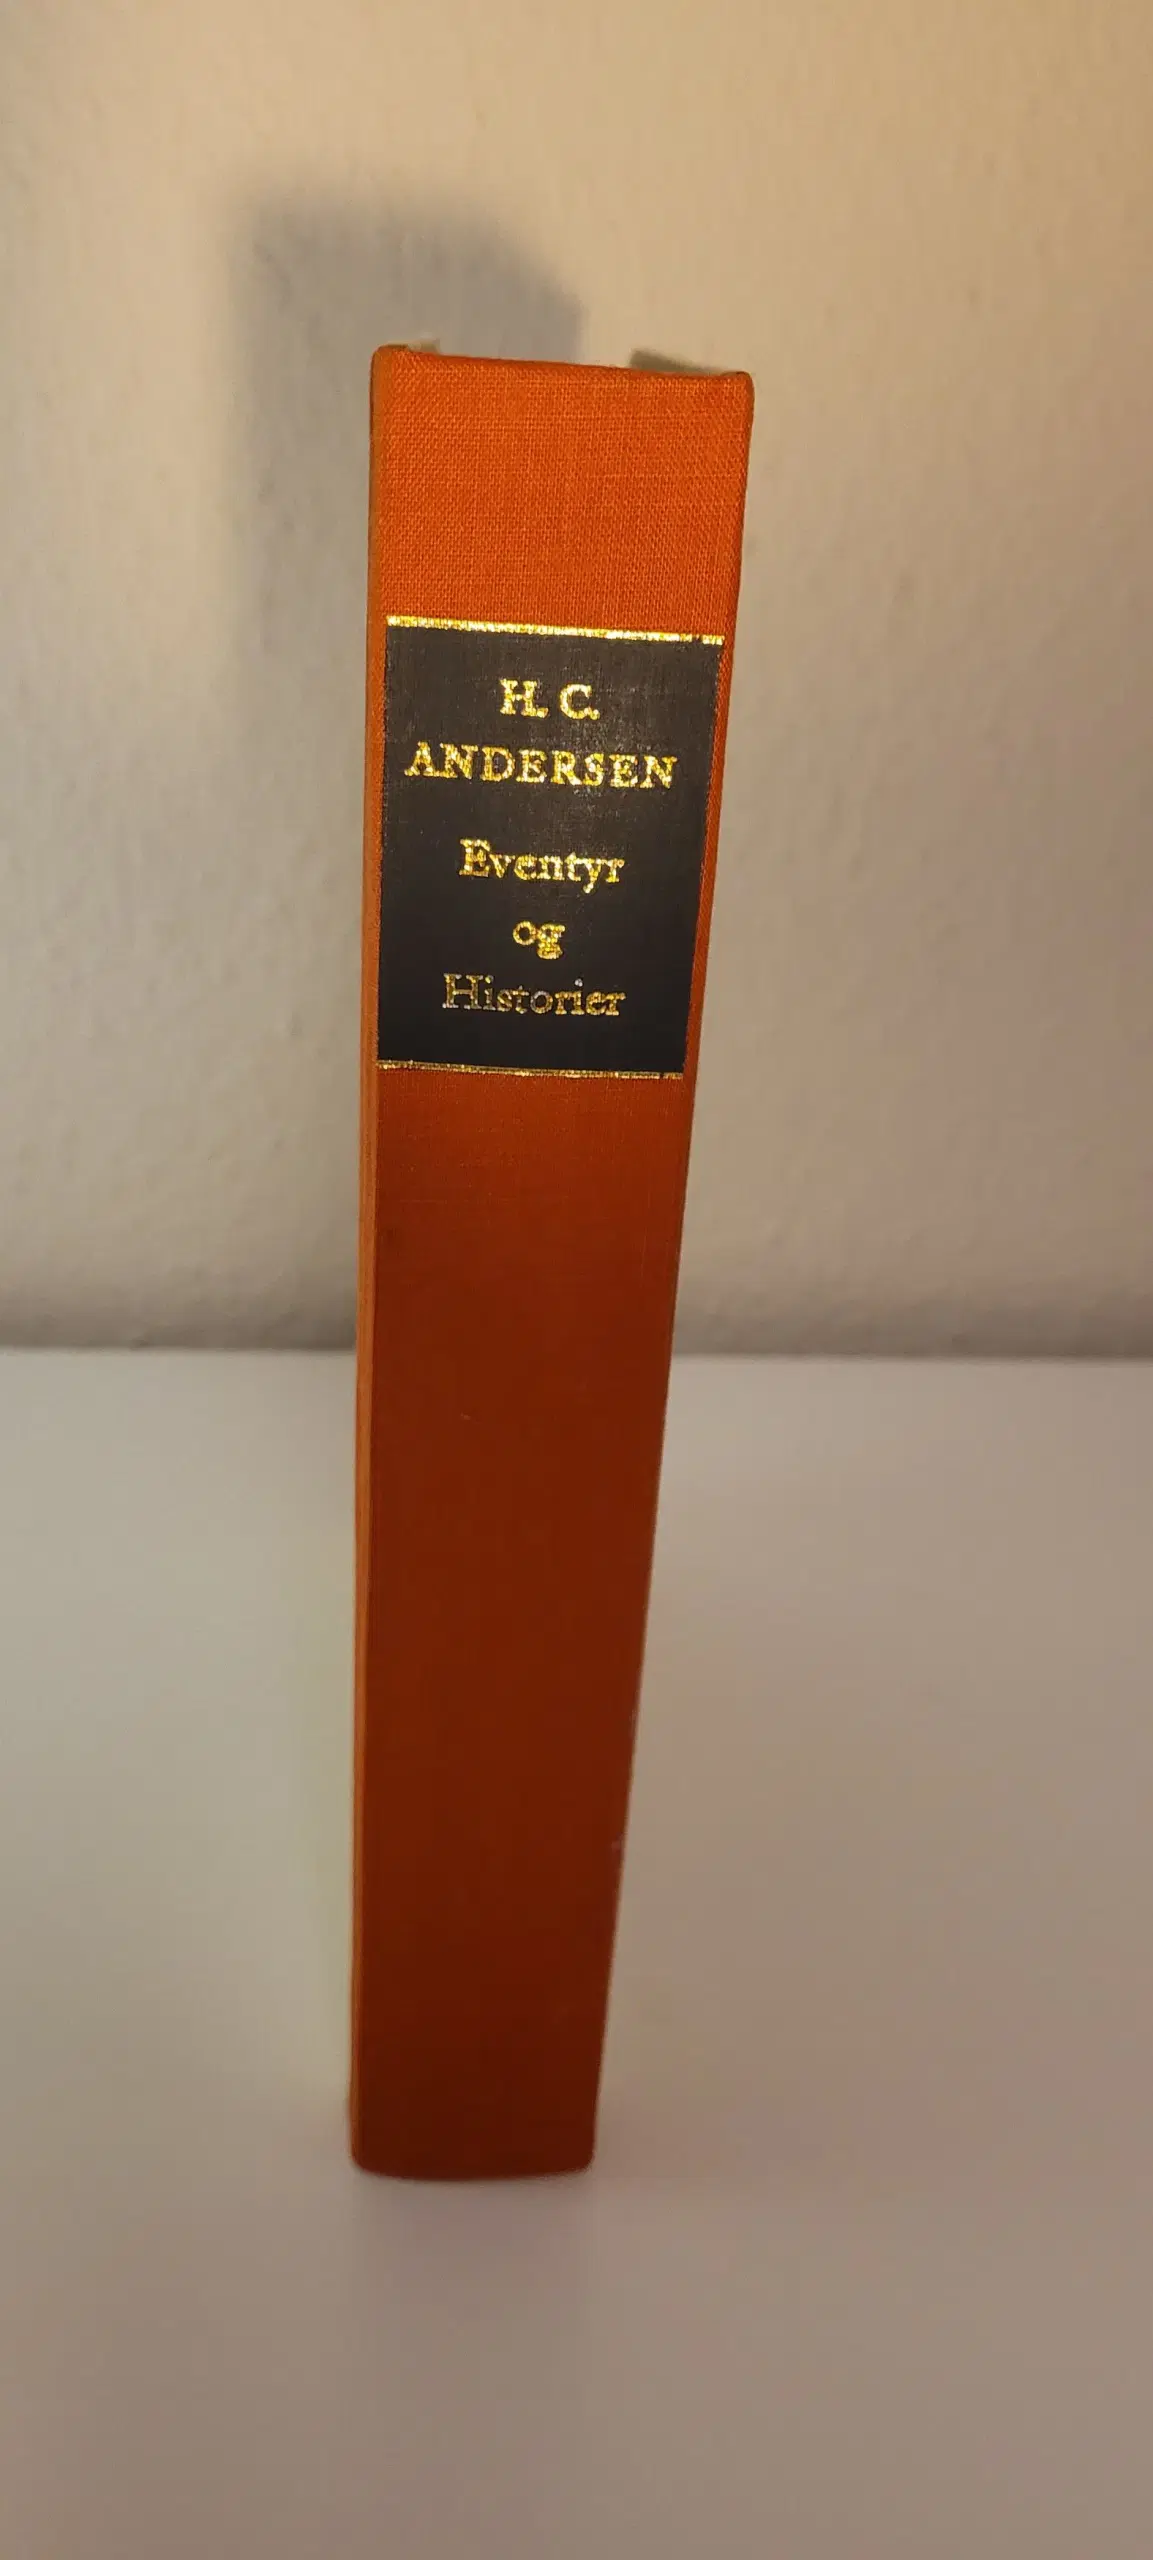 H C Andersen - Eventyr og Historier